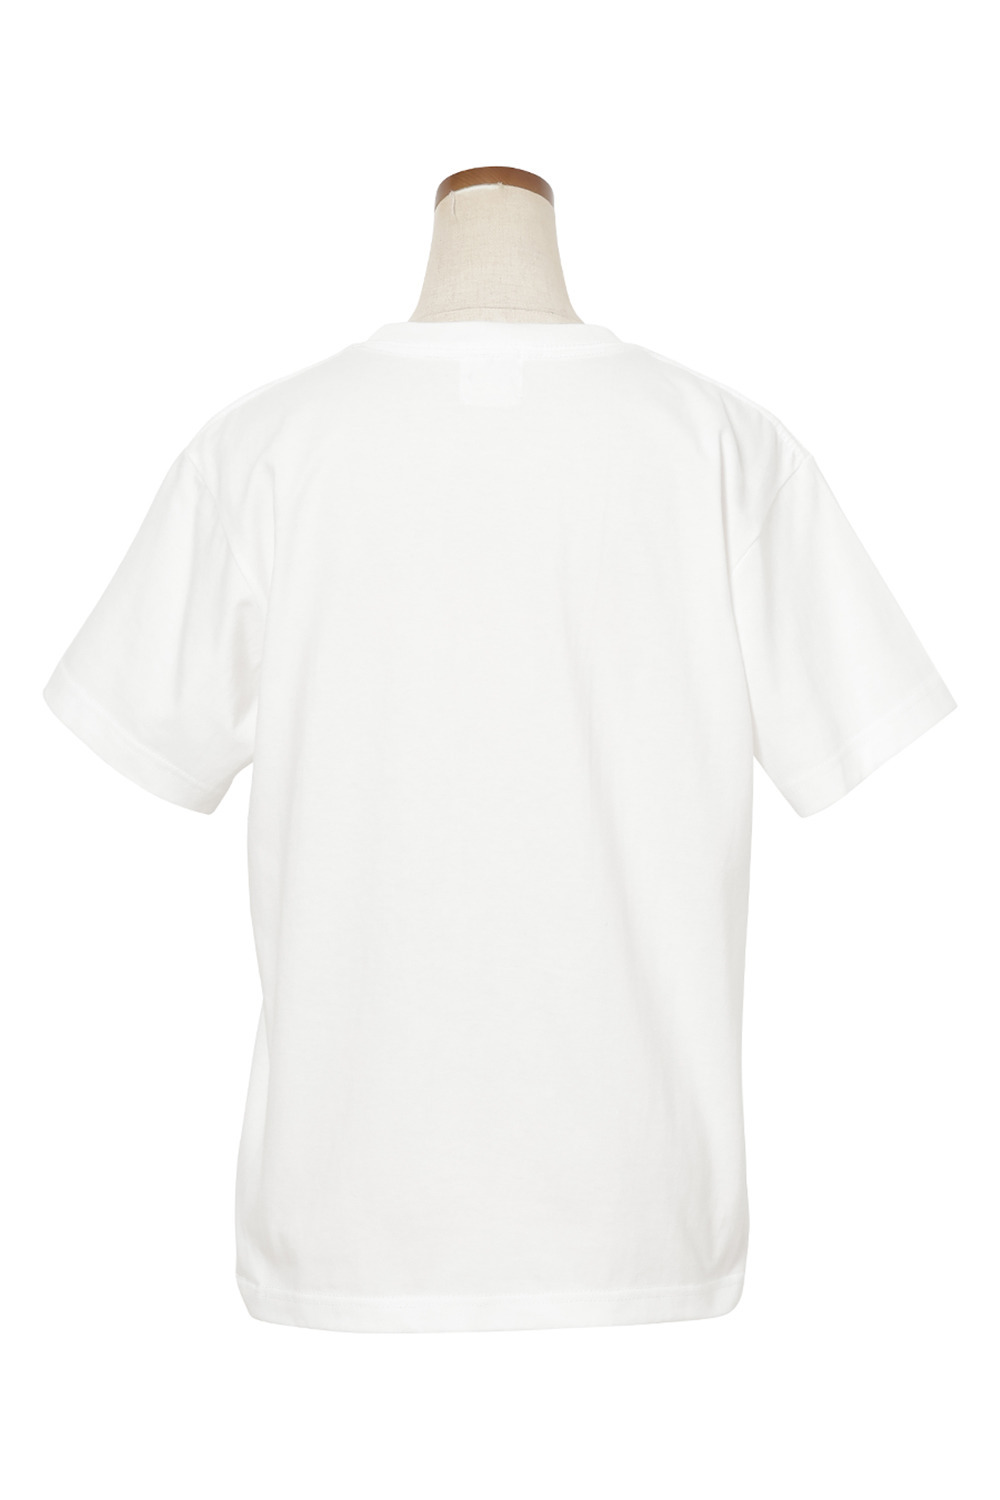 PANDA Embroidery Tシャツ 詳細画像 ホワイト 2